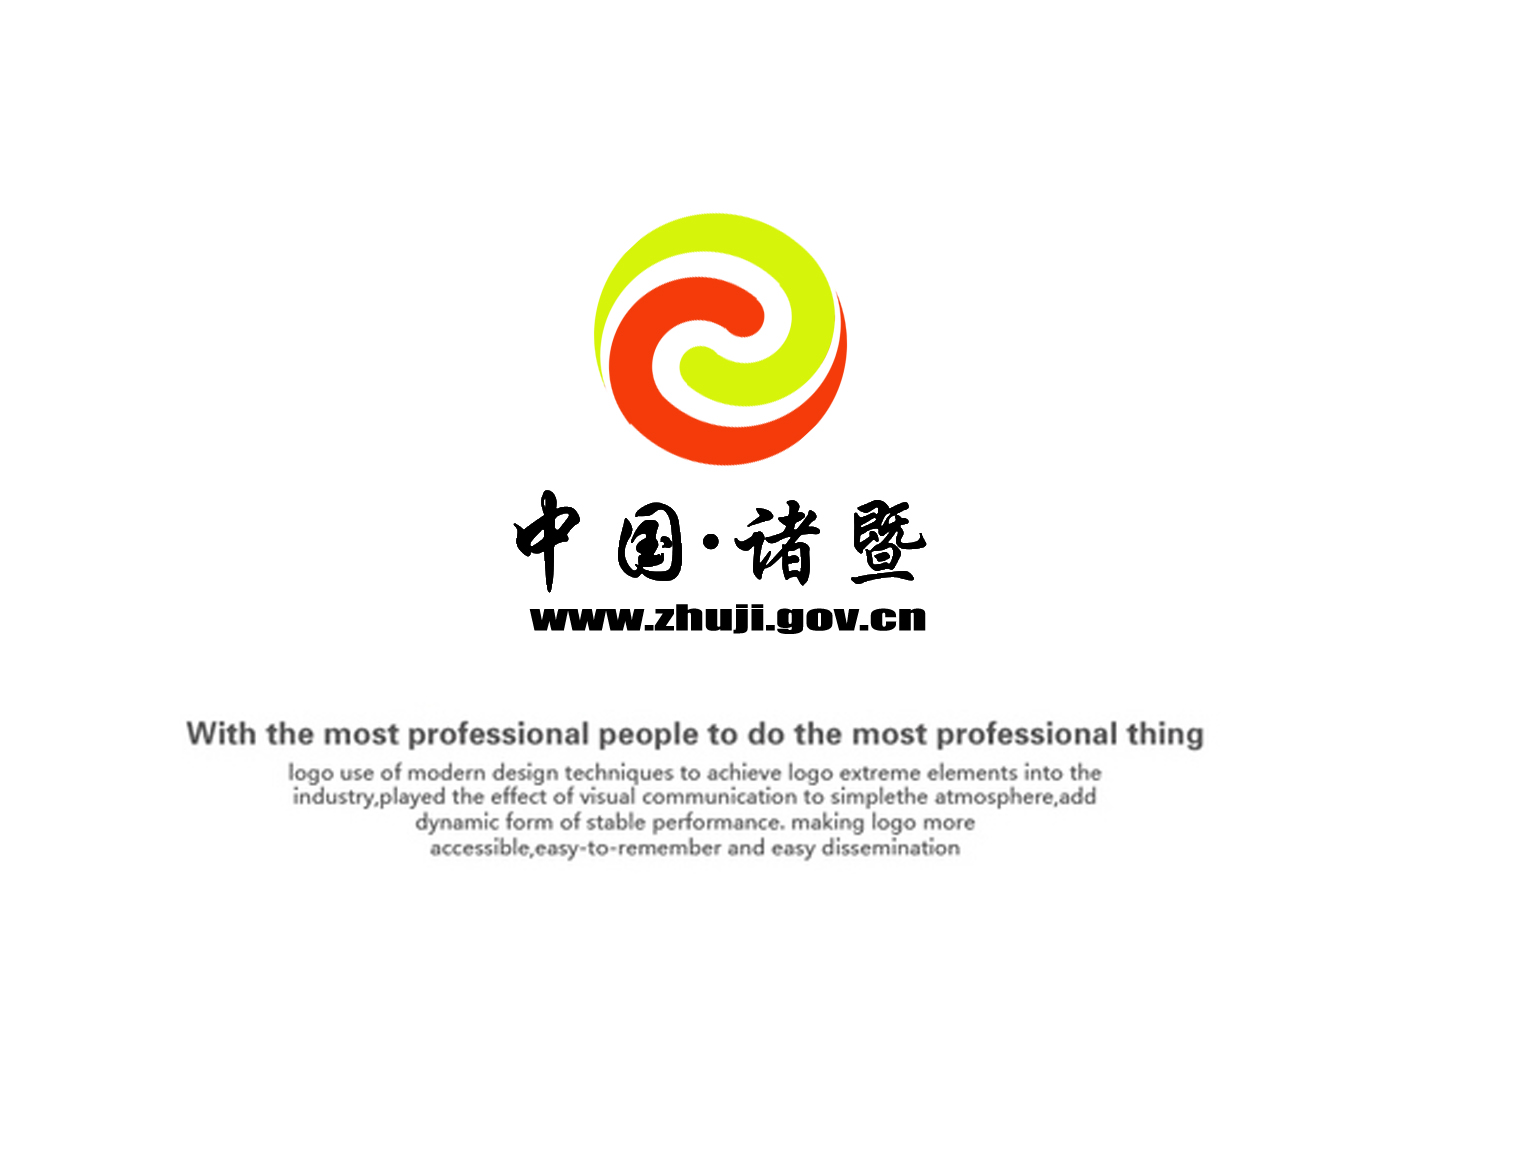 门户网站logo图片